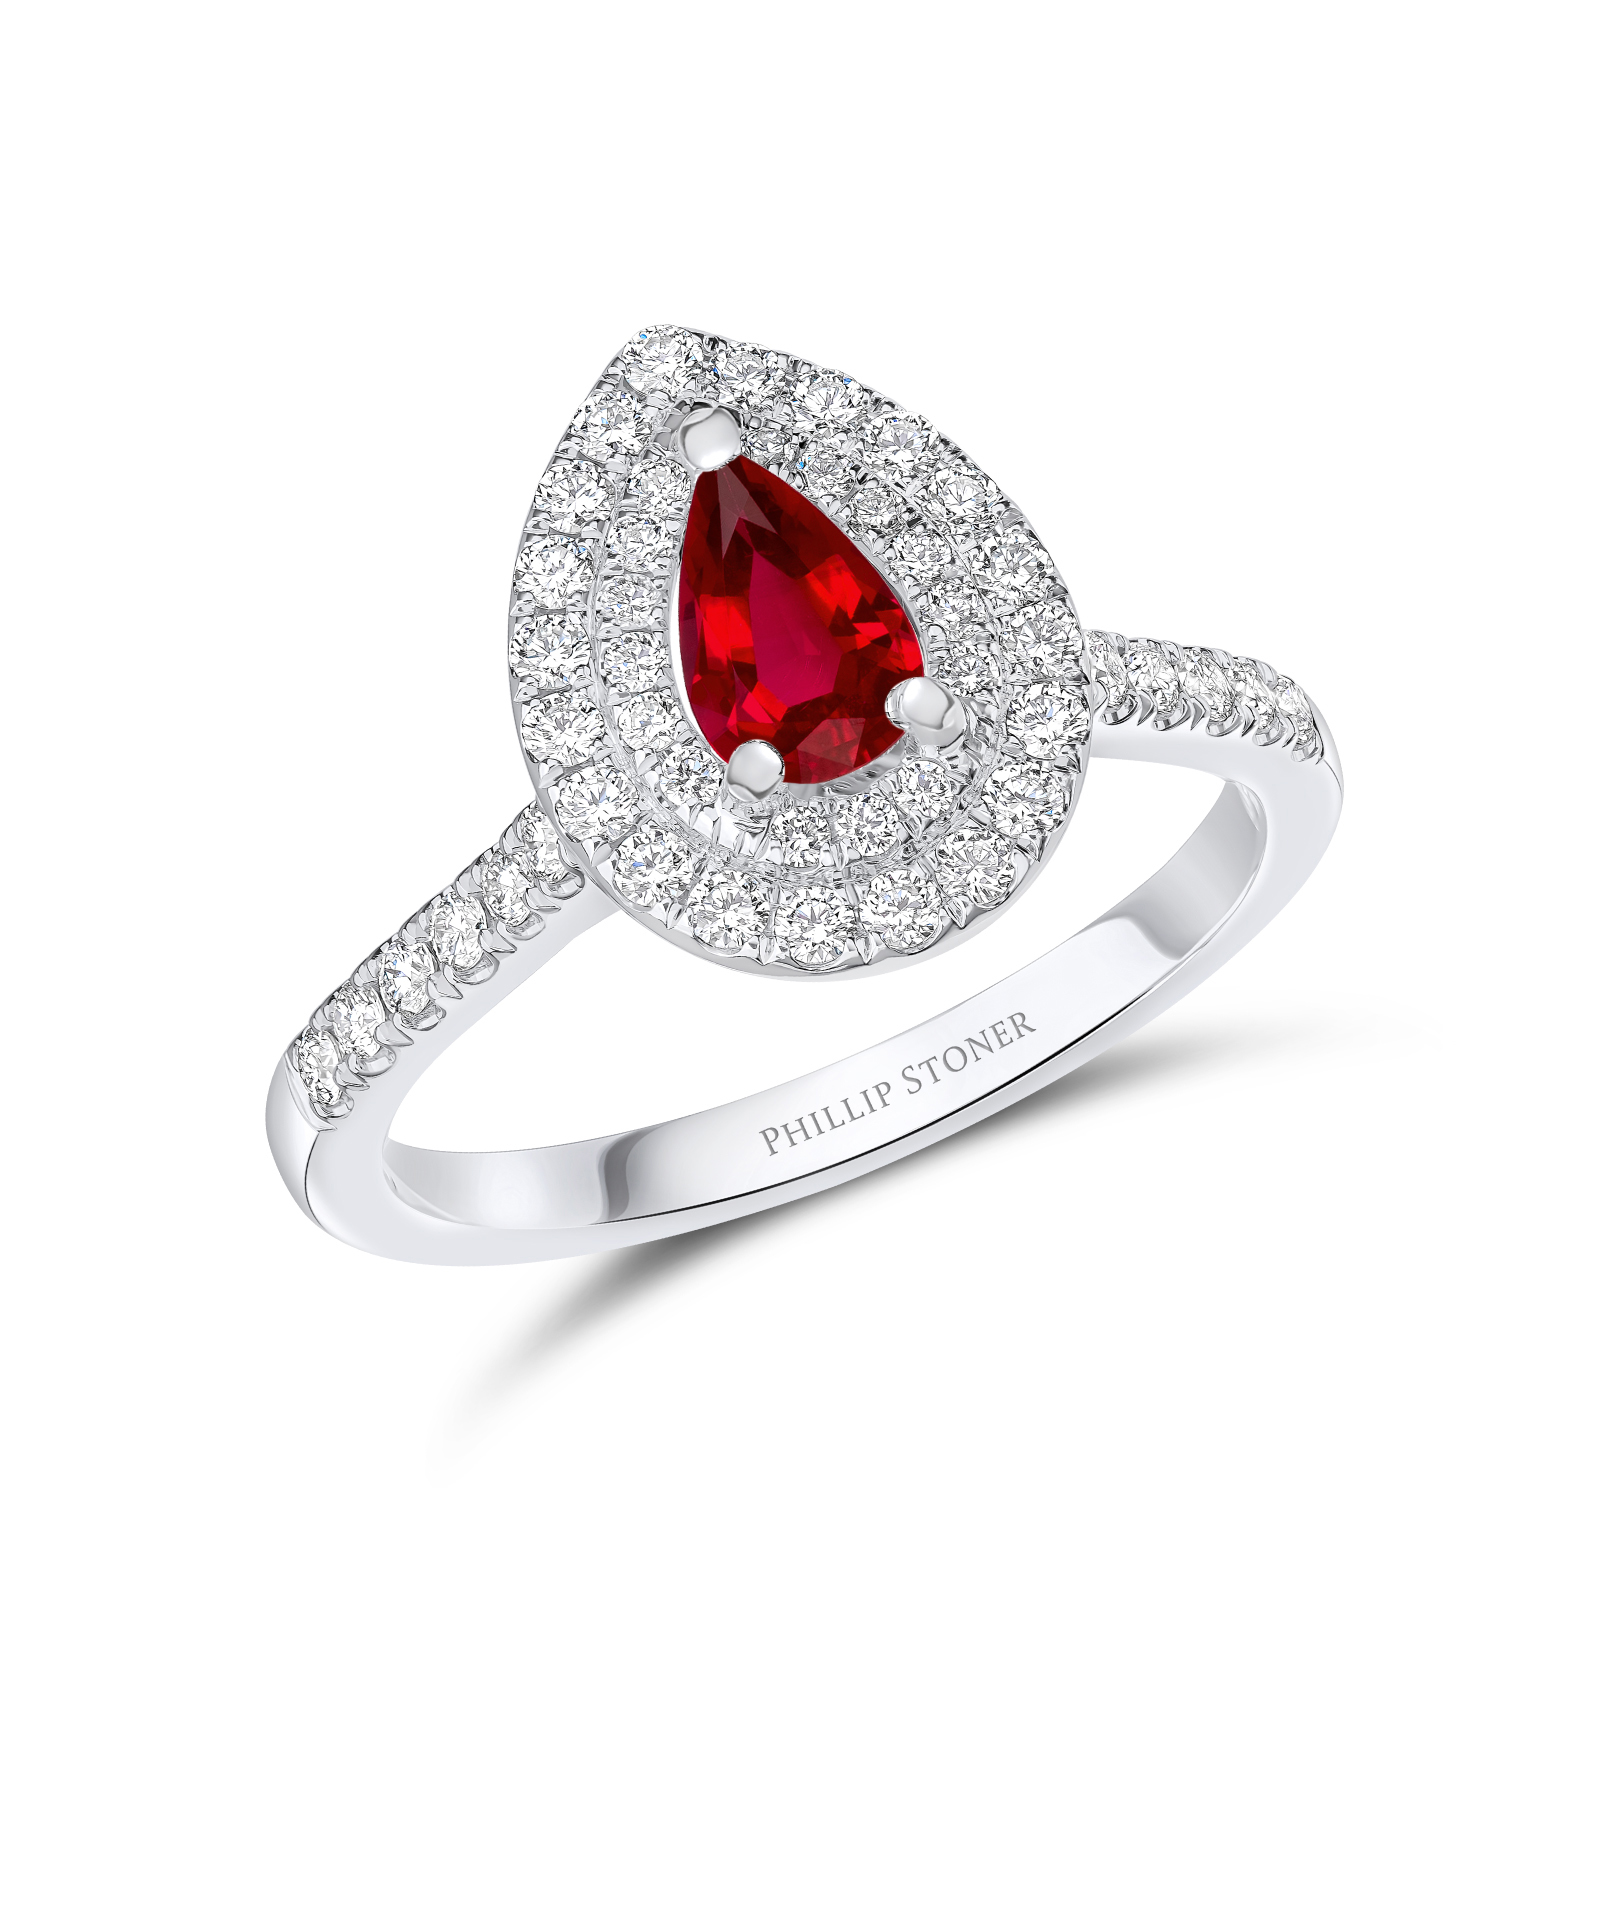 0.60ct Pear Cut Illusion Set Ruby & Diamond Halo Ring - Phillip Stoner The Jeweller